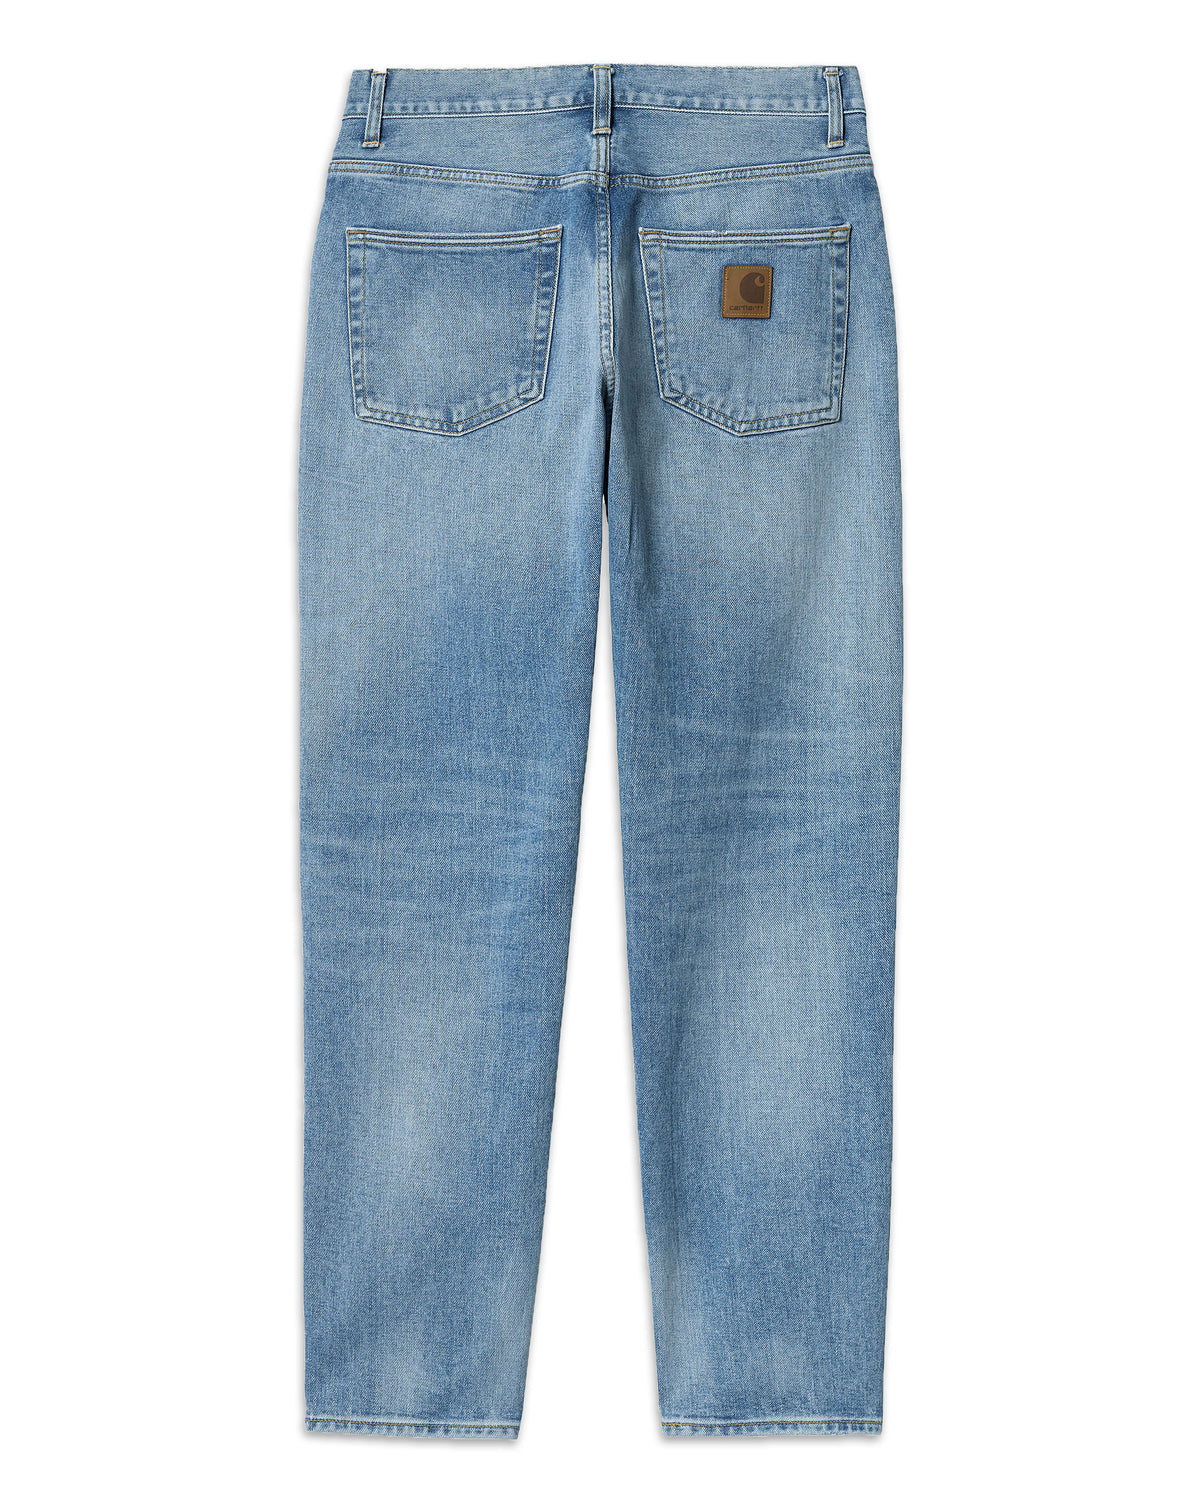 Jeans Carhartt Wip Klondike Pant Blue Light Used Wash